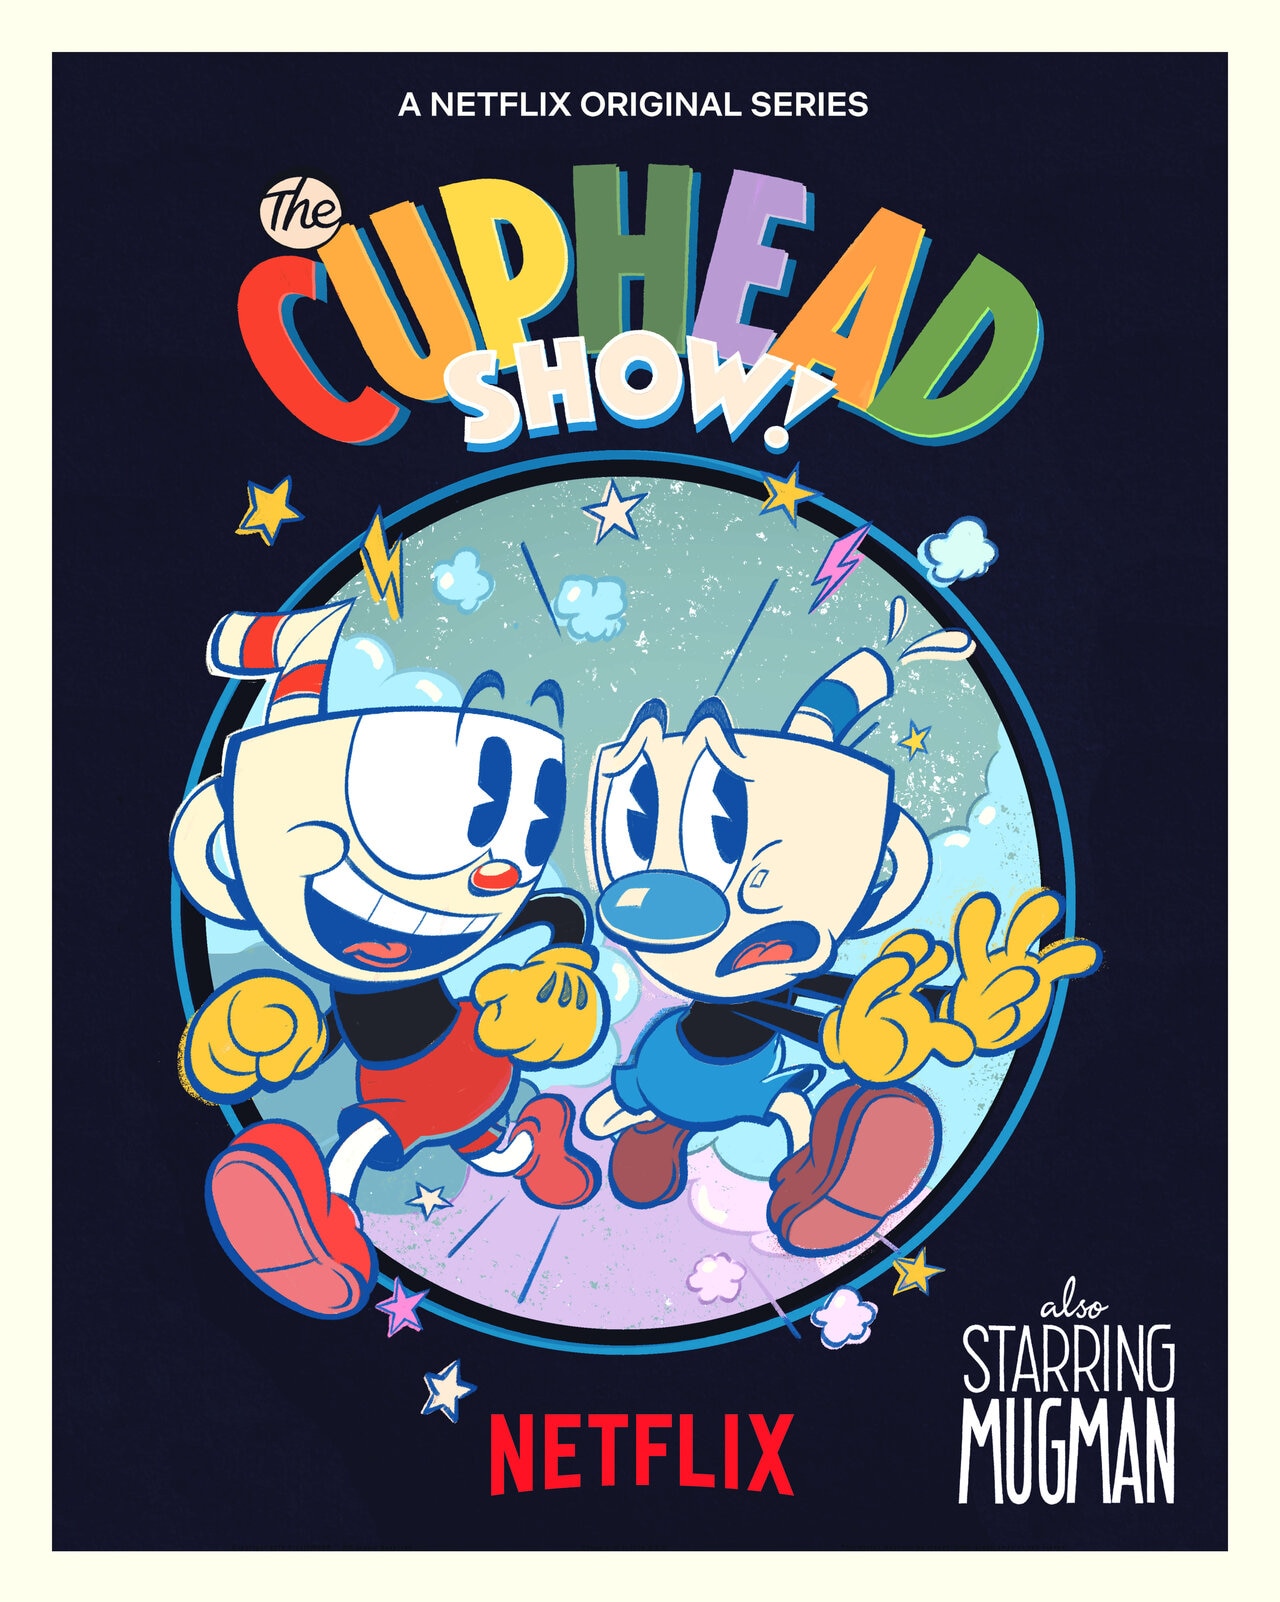 CUPHEAD SHOW SEASON 2 SPOILERS) *original game styles your cuphead show*